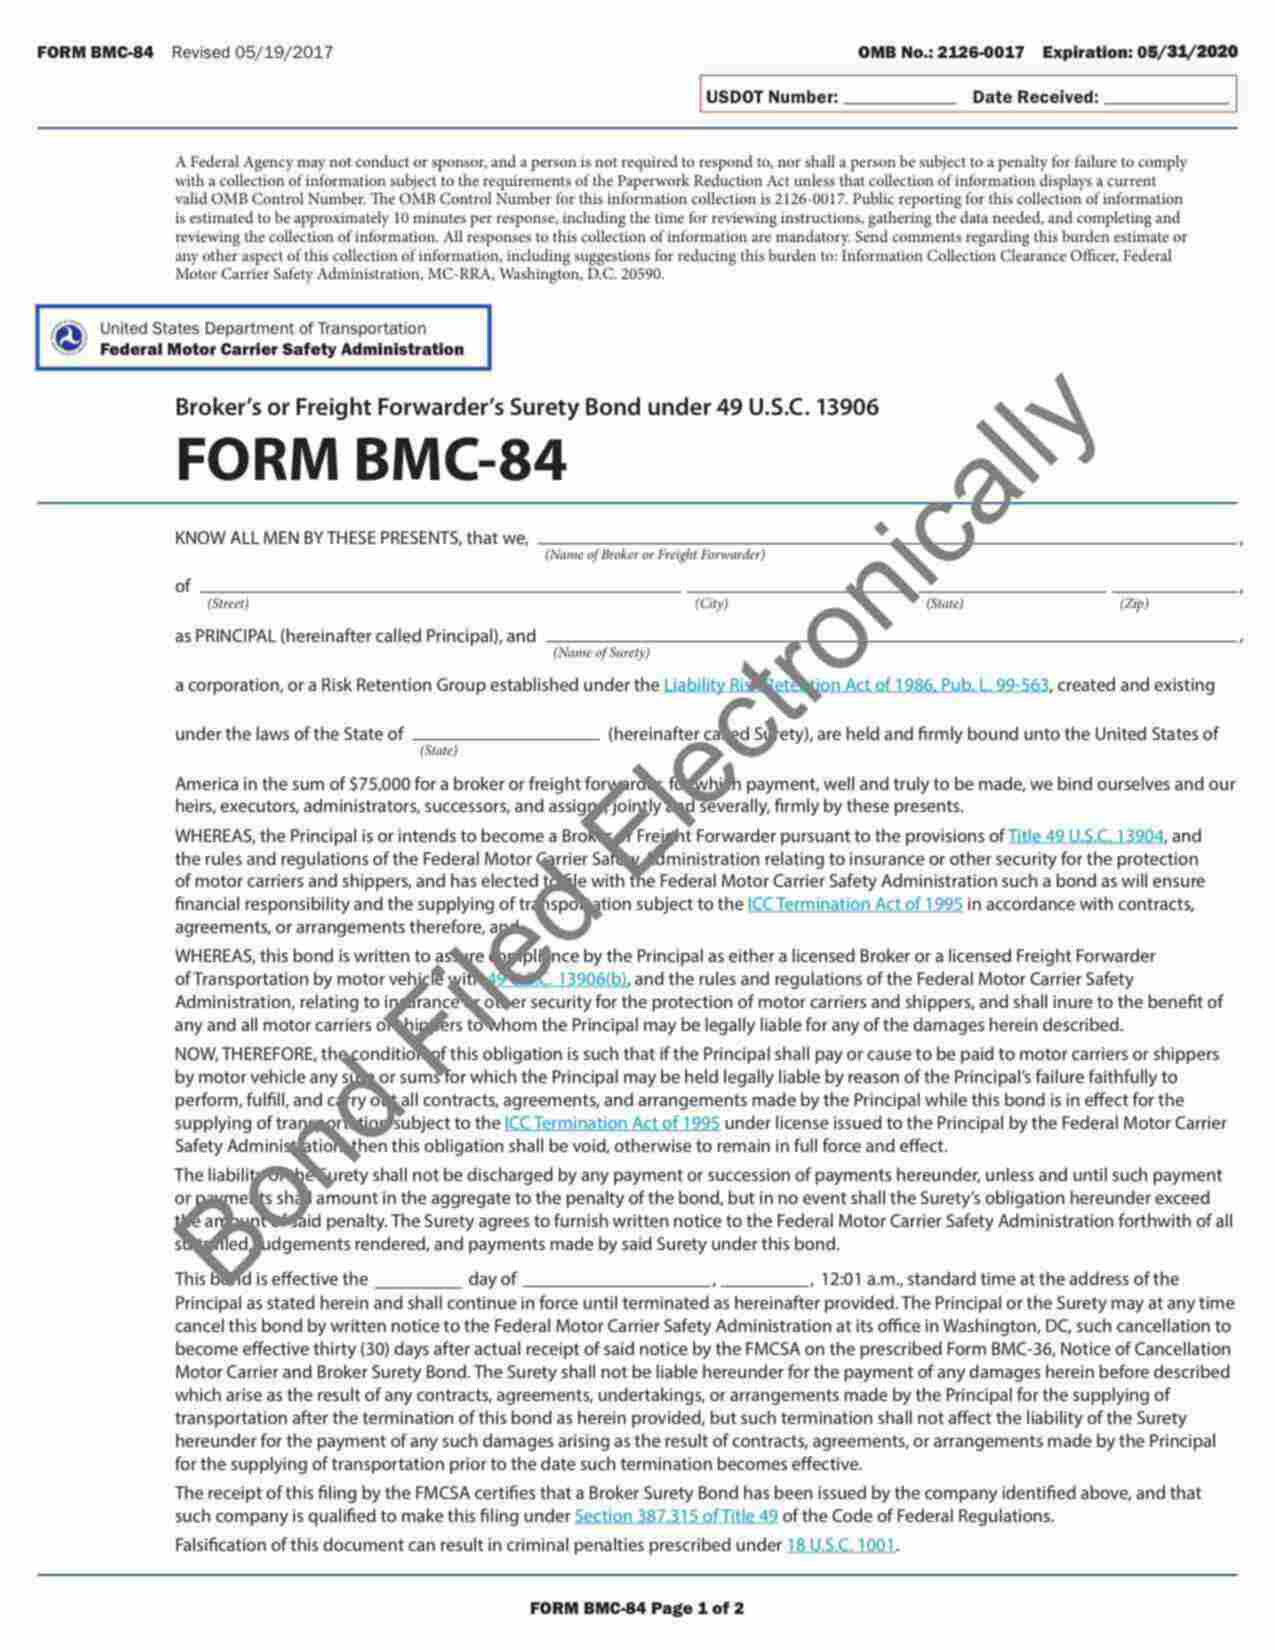 Washington Property Broker or Freight Forwarder BMC-84 (ICC Broker) Bond Form